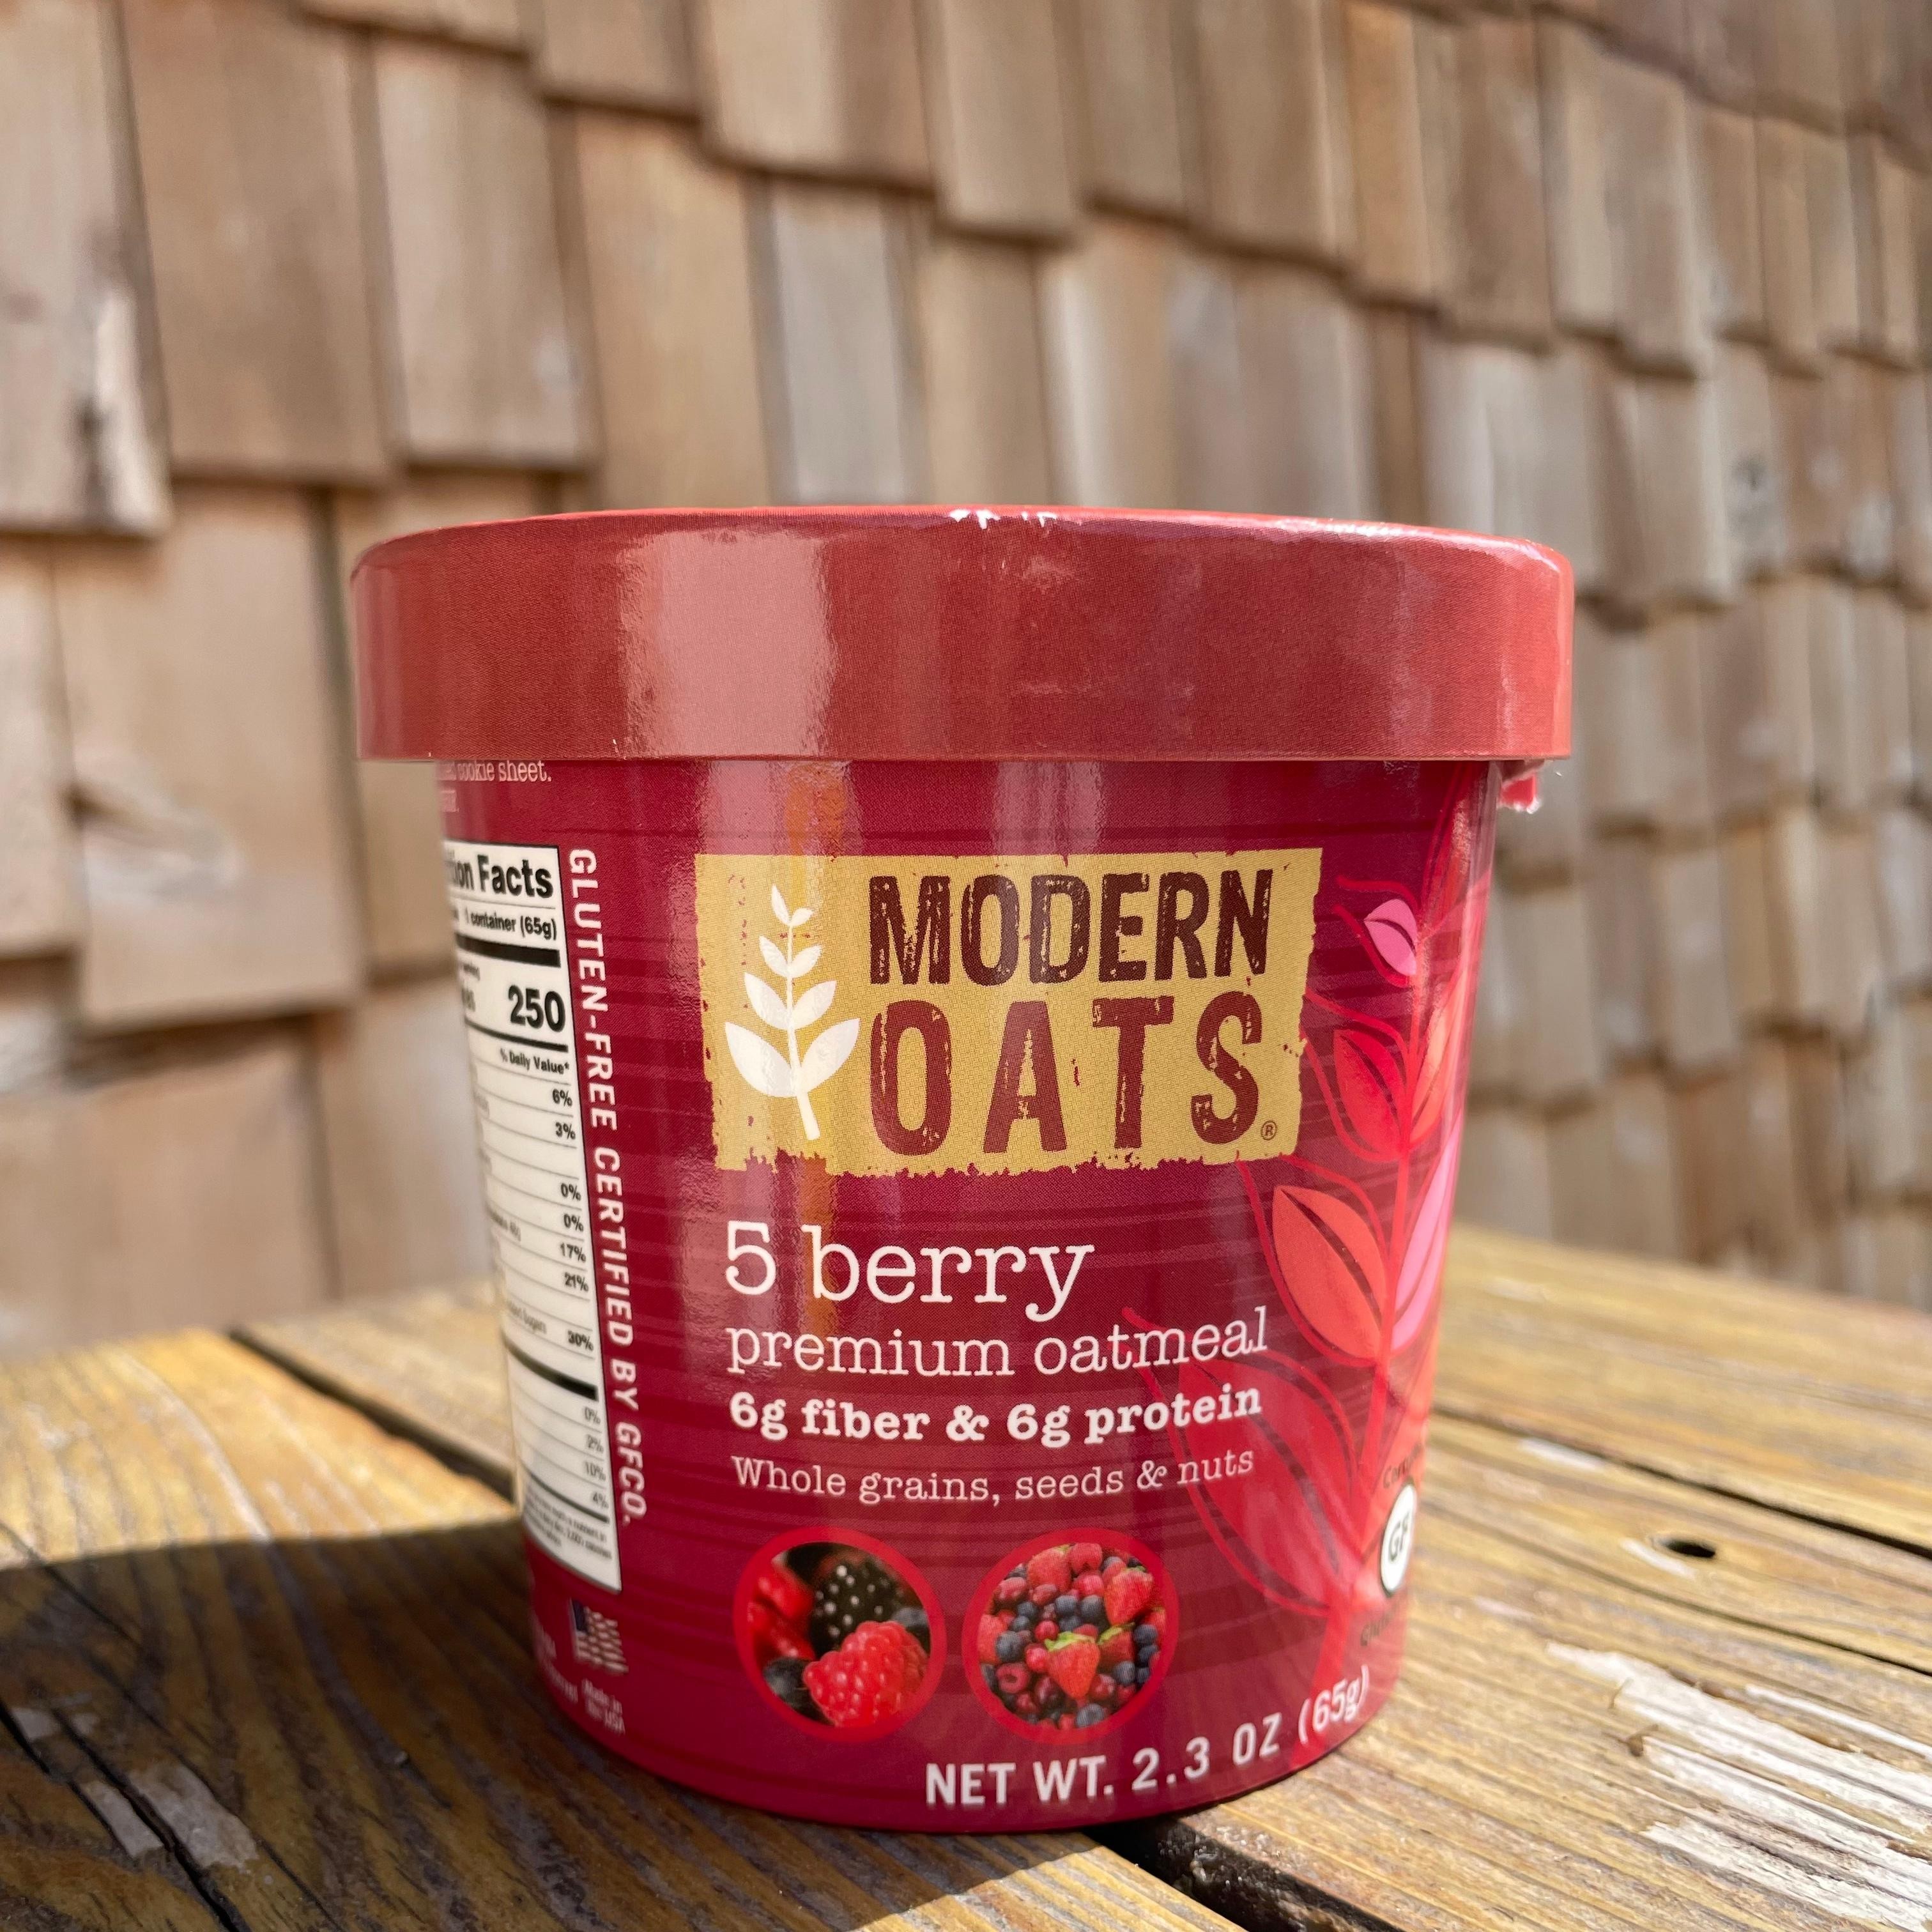 Modern Oats Oatmeal - 5 Berry